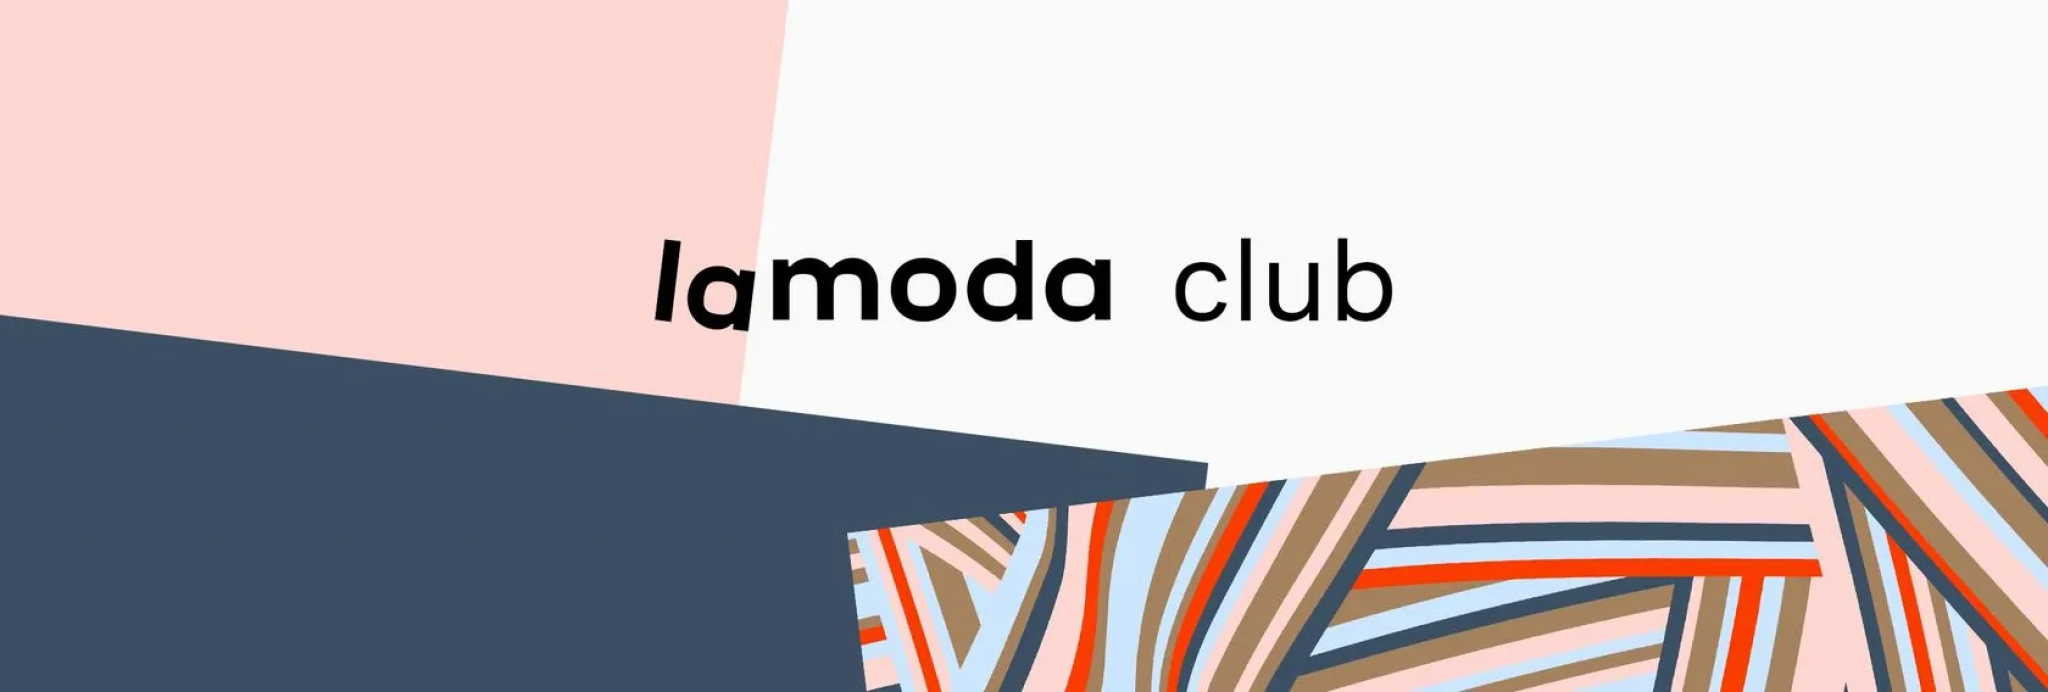 Lamoda Club. Ламода реклама. Lamoda логотип. Lаmоdа логотип. Ламода колл